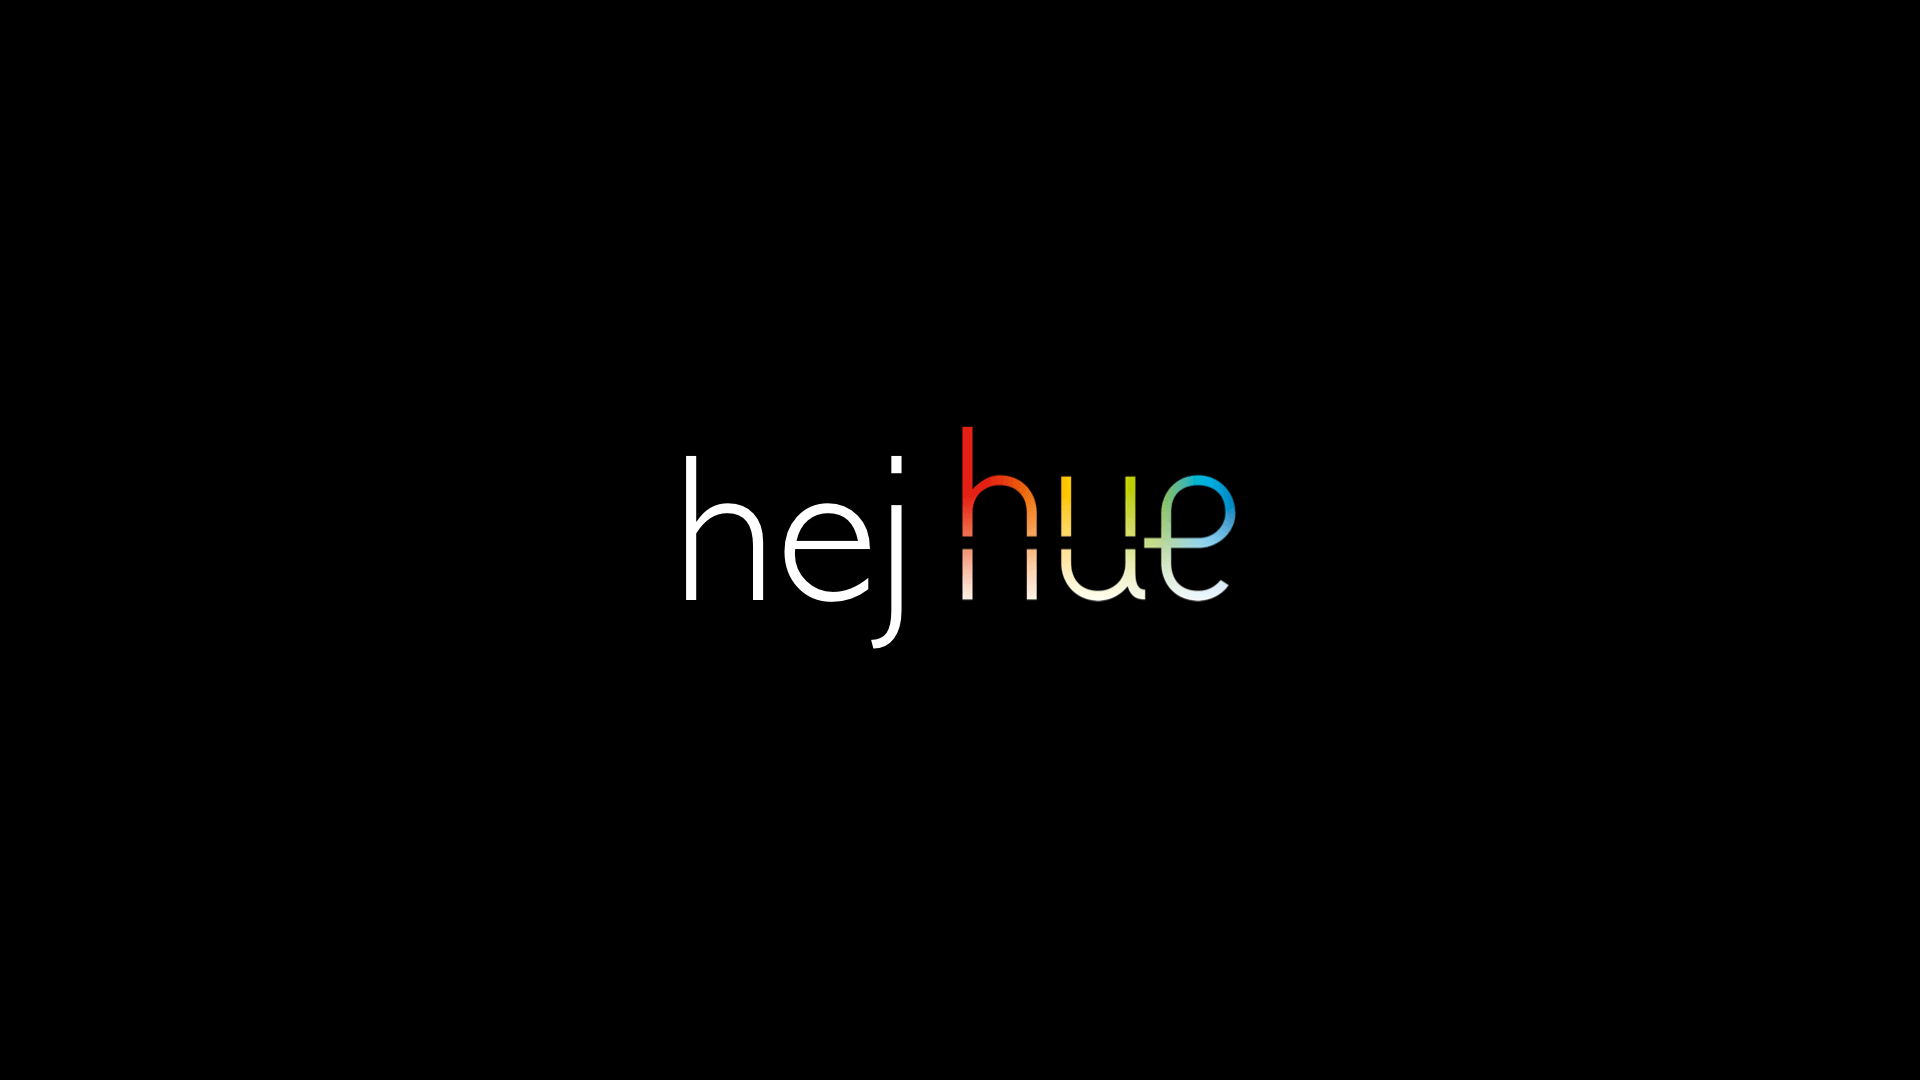 hello-hue-philips-logo-swedish